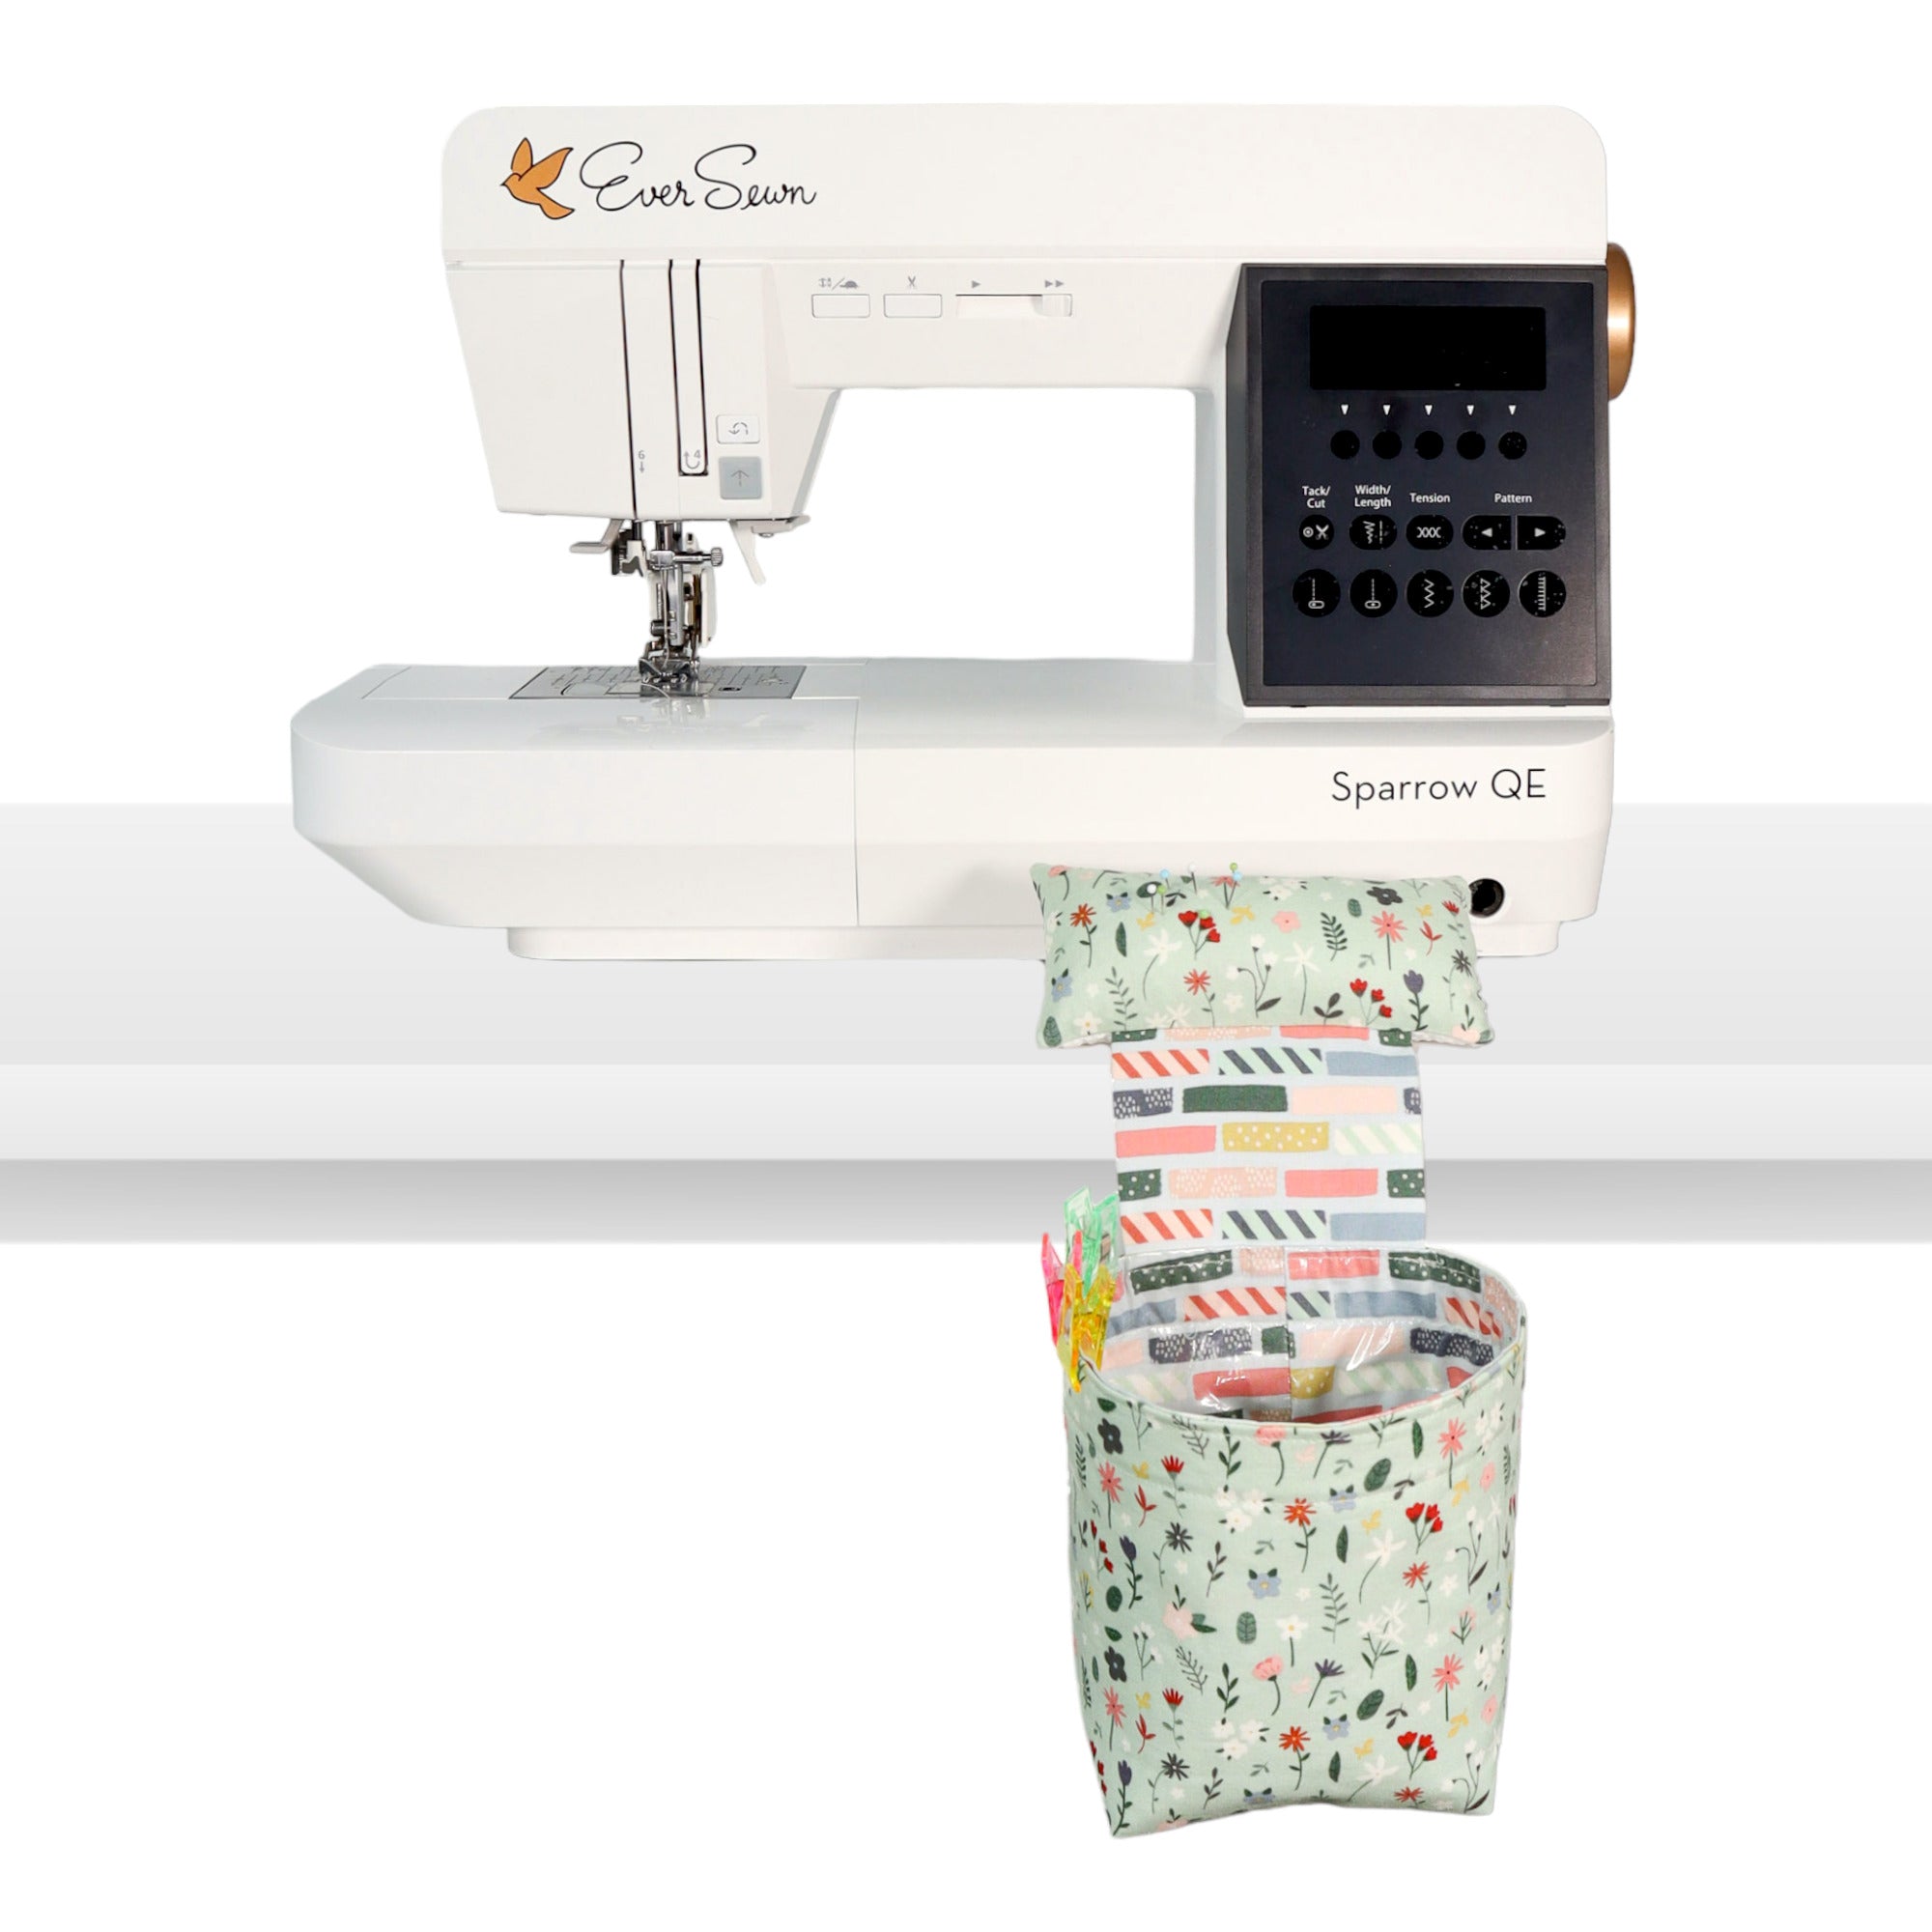 Bookmark Sewing Kit - Rainbows & Unicorns – Crosscut Sewing Co.